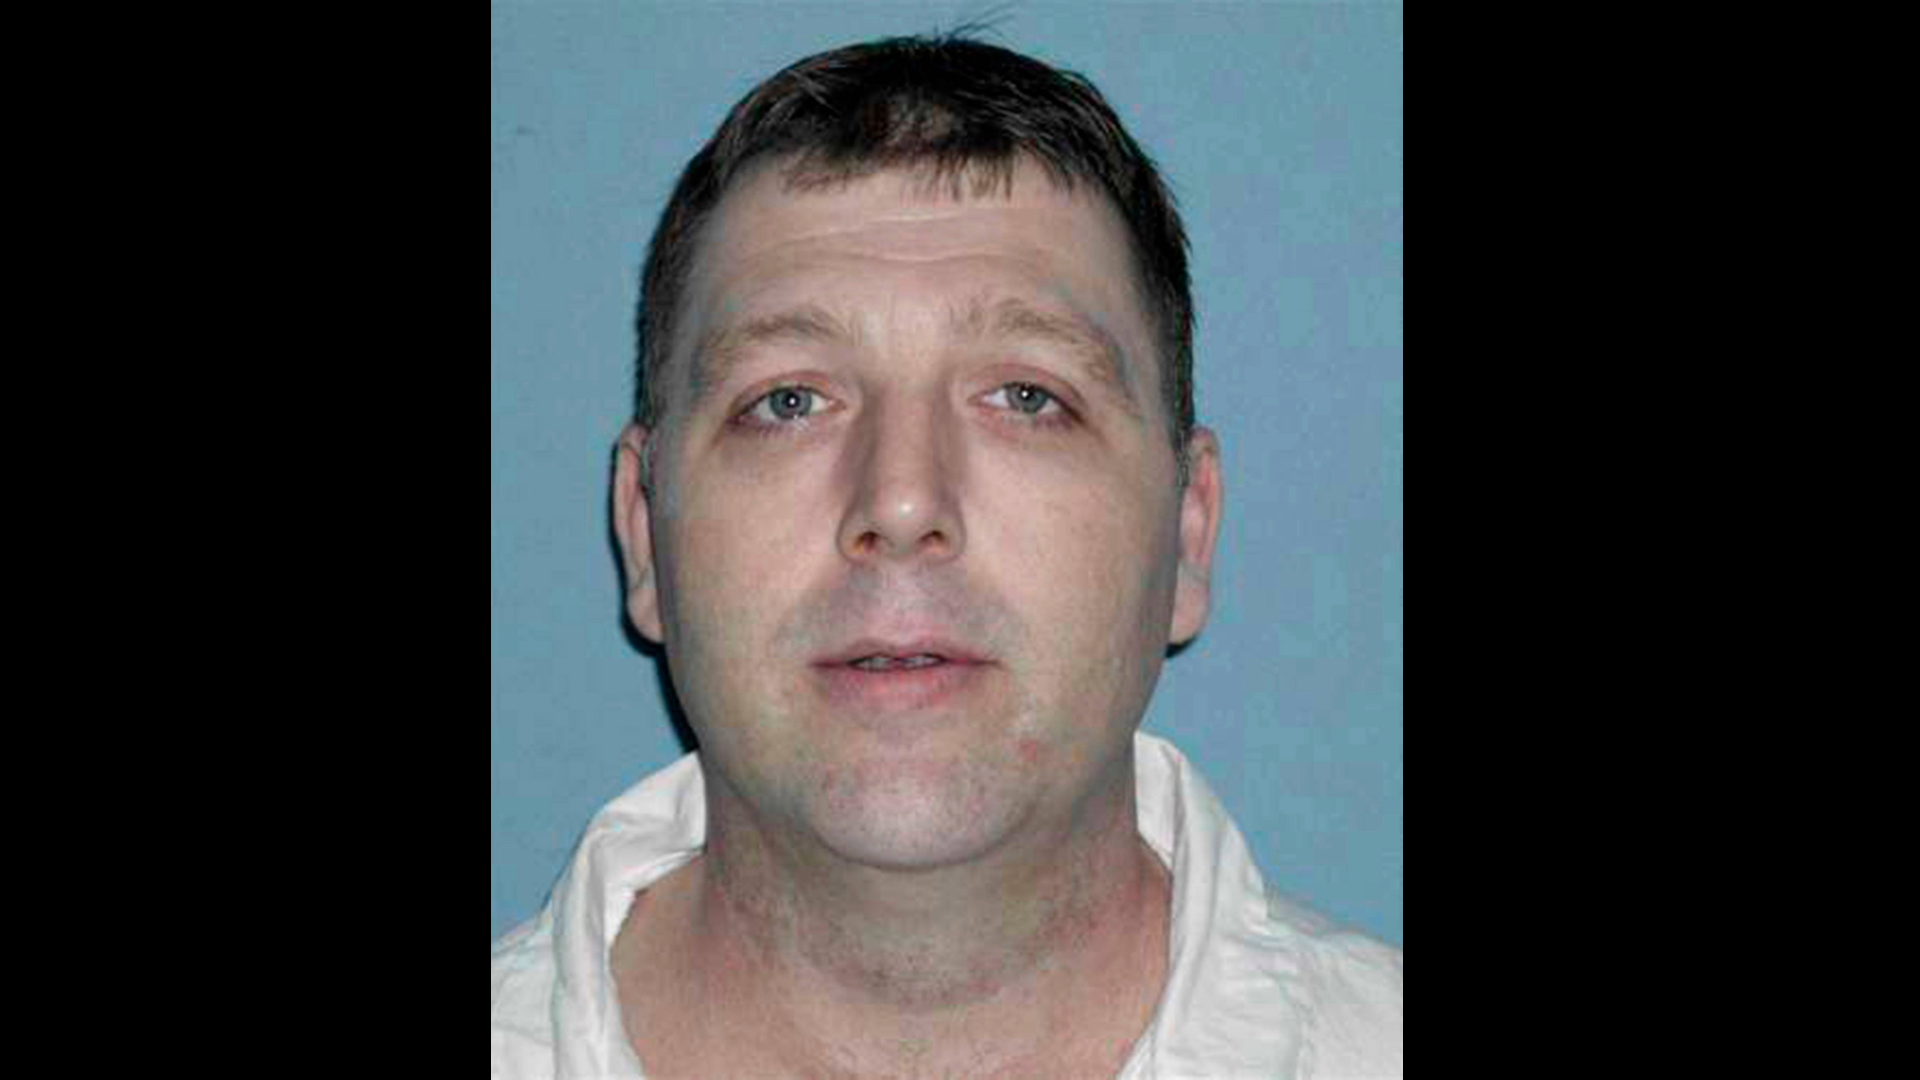 Alabama set to execute death row inmate Jamie Mills for 2004 murders